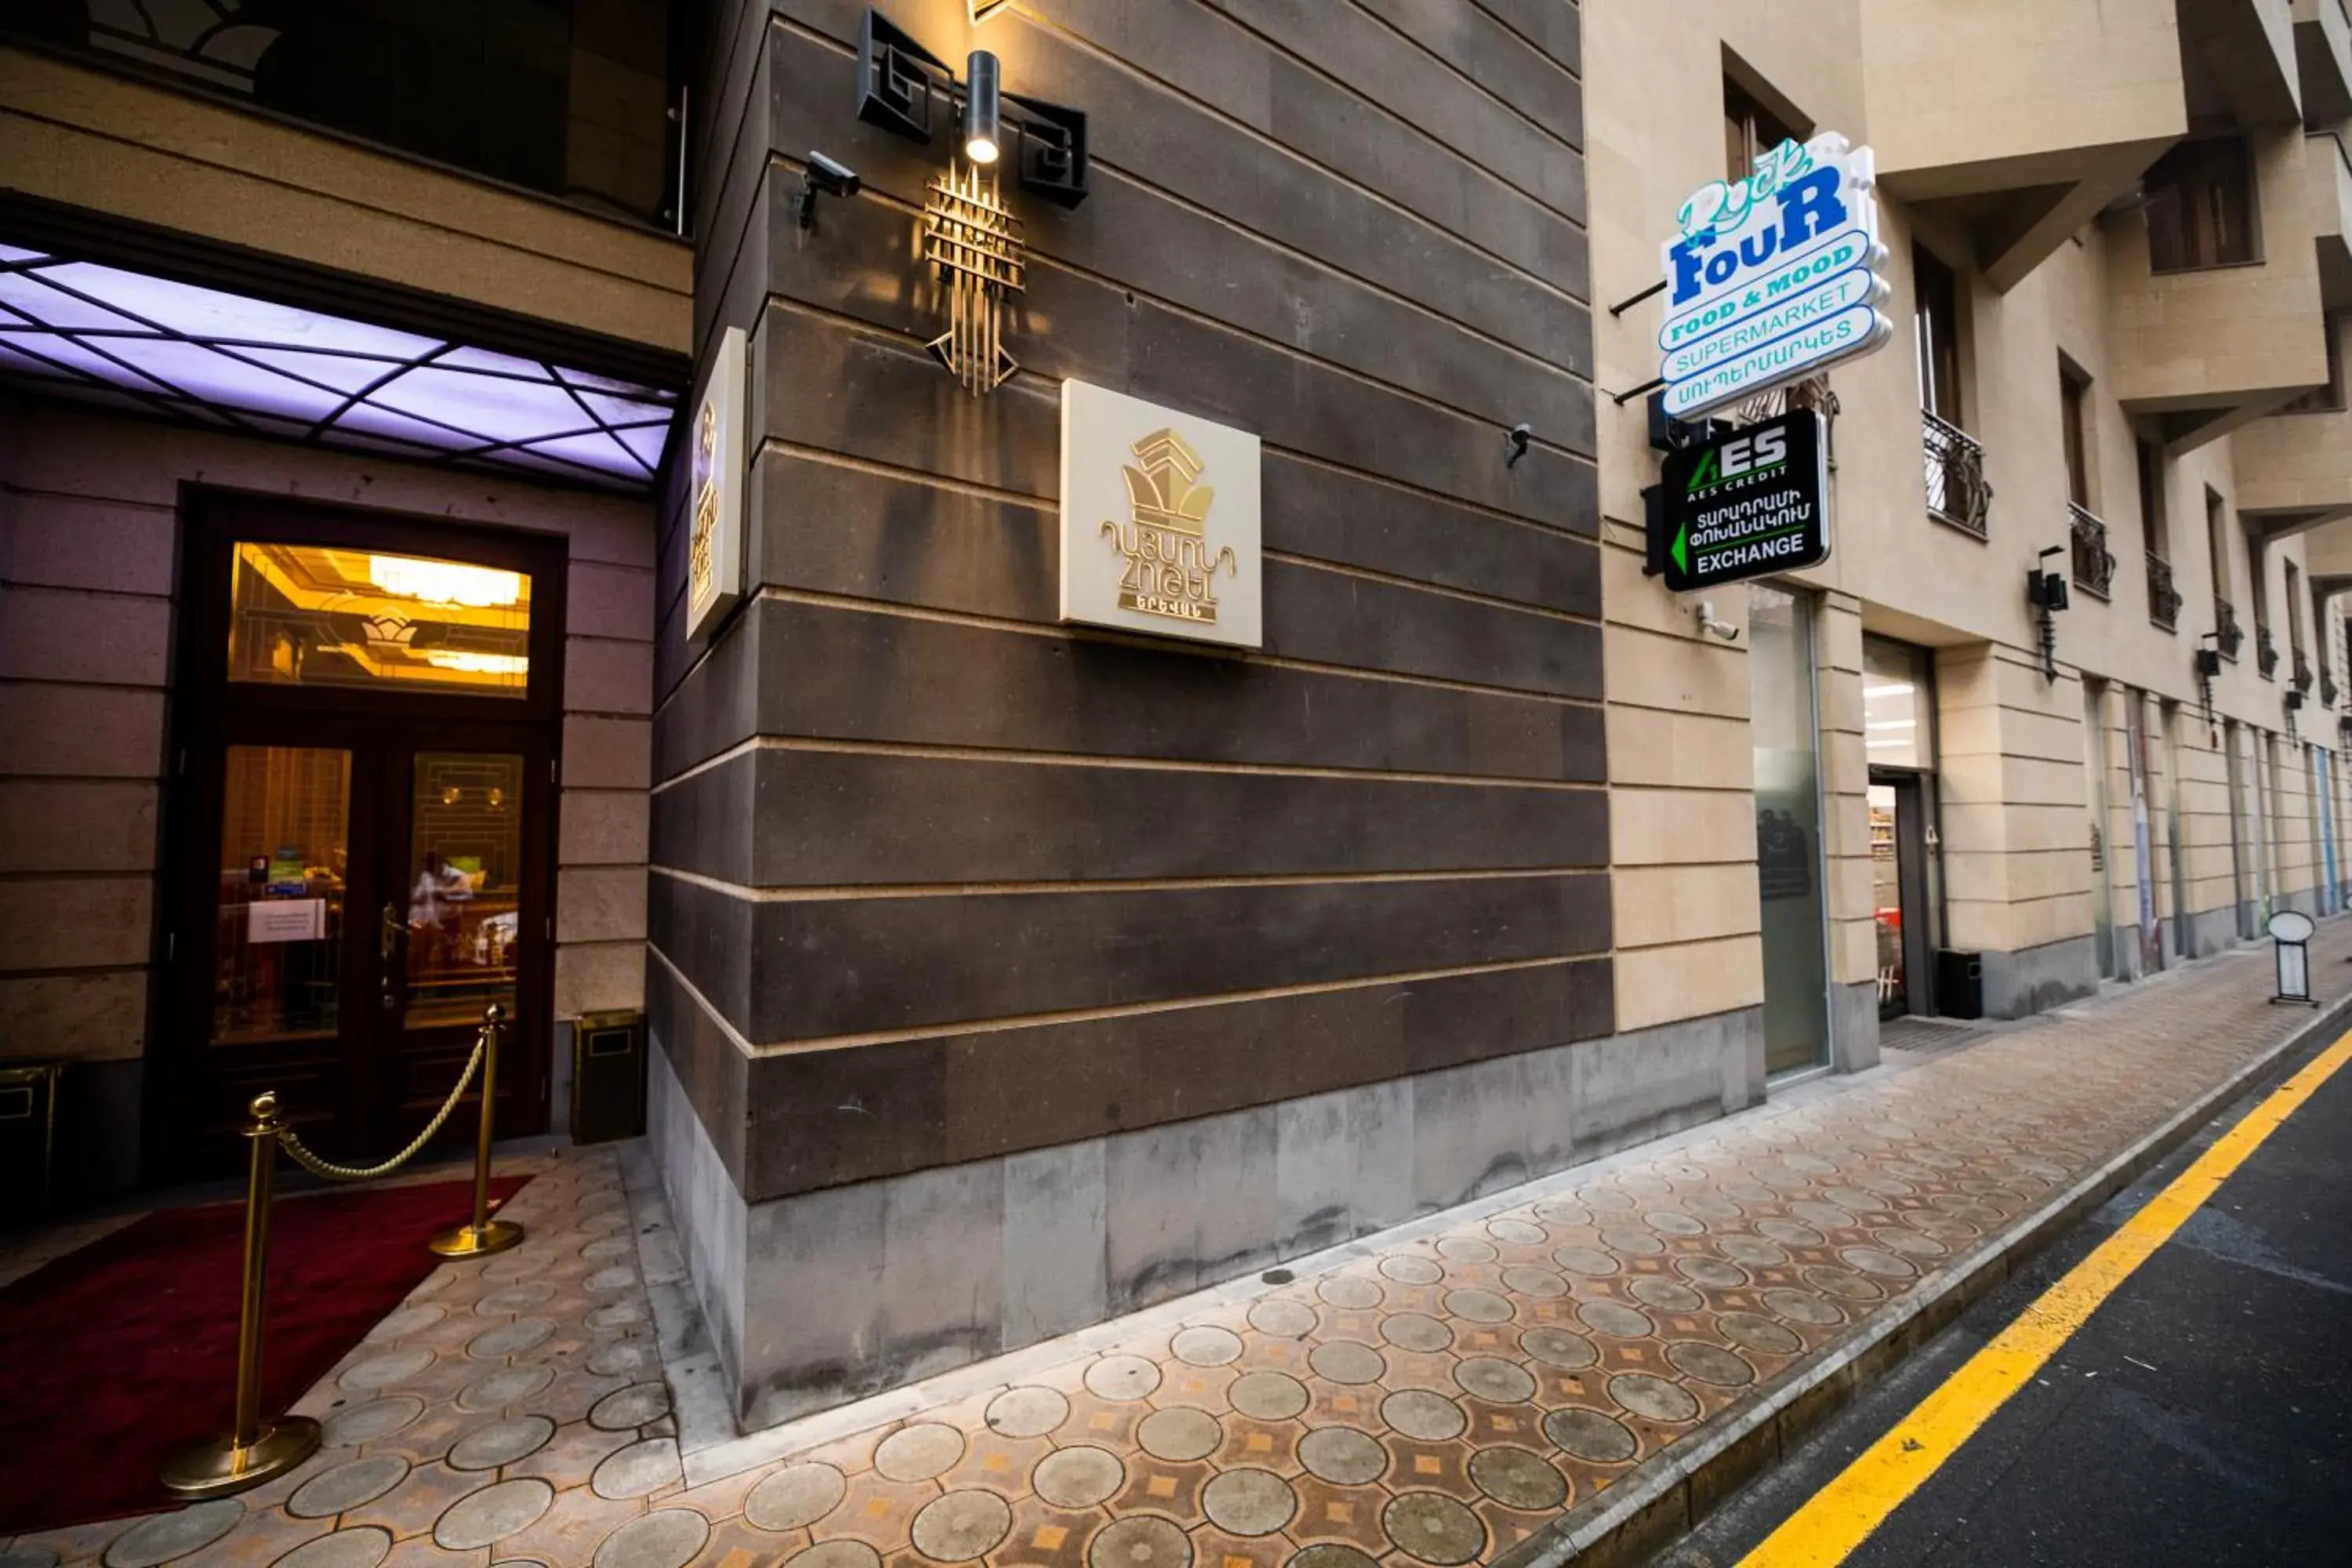 Facade/entrance in Diamond Hotel Yerevan